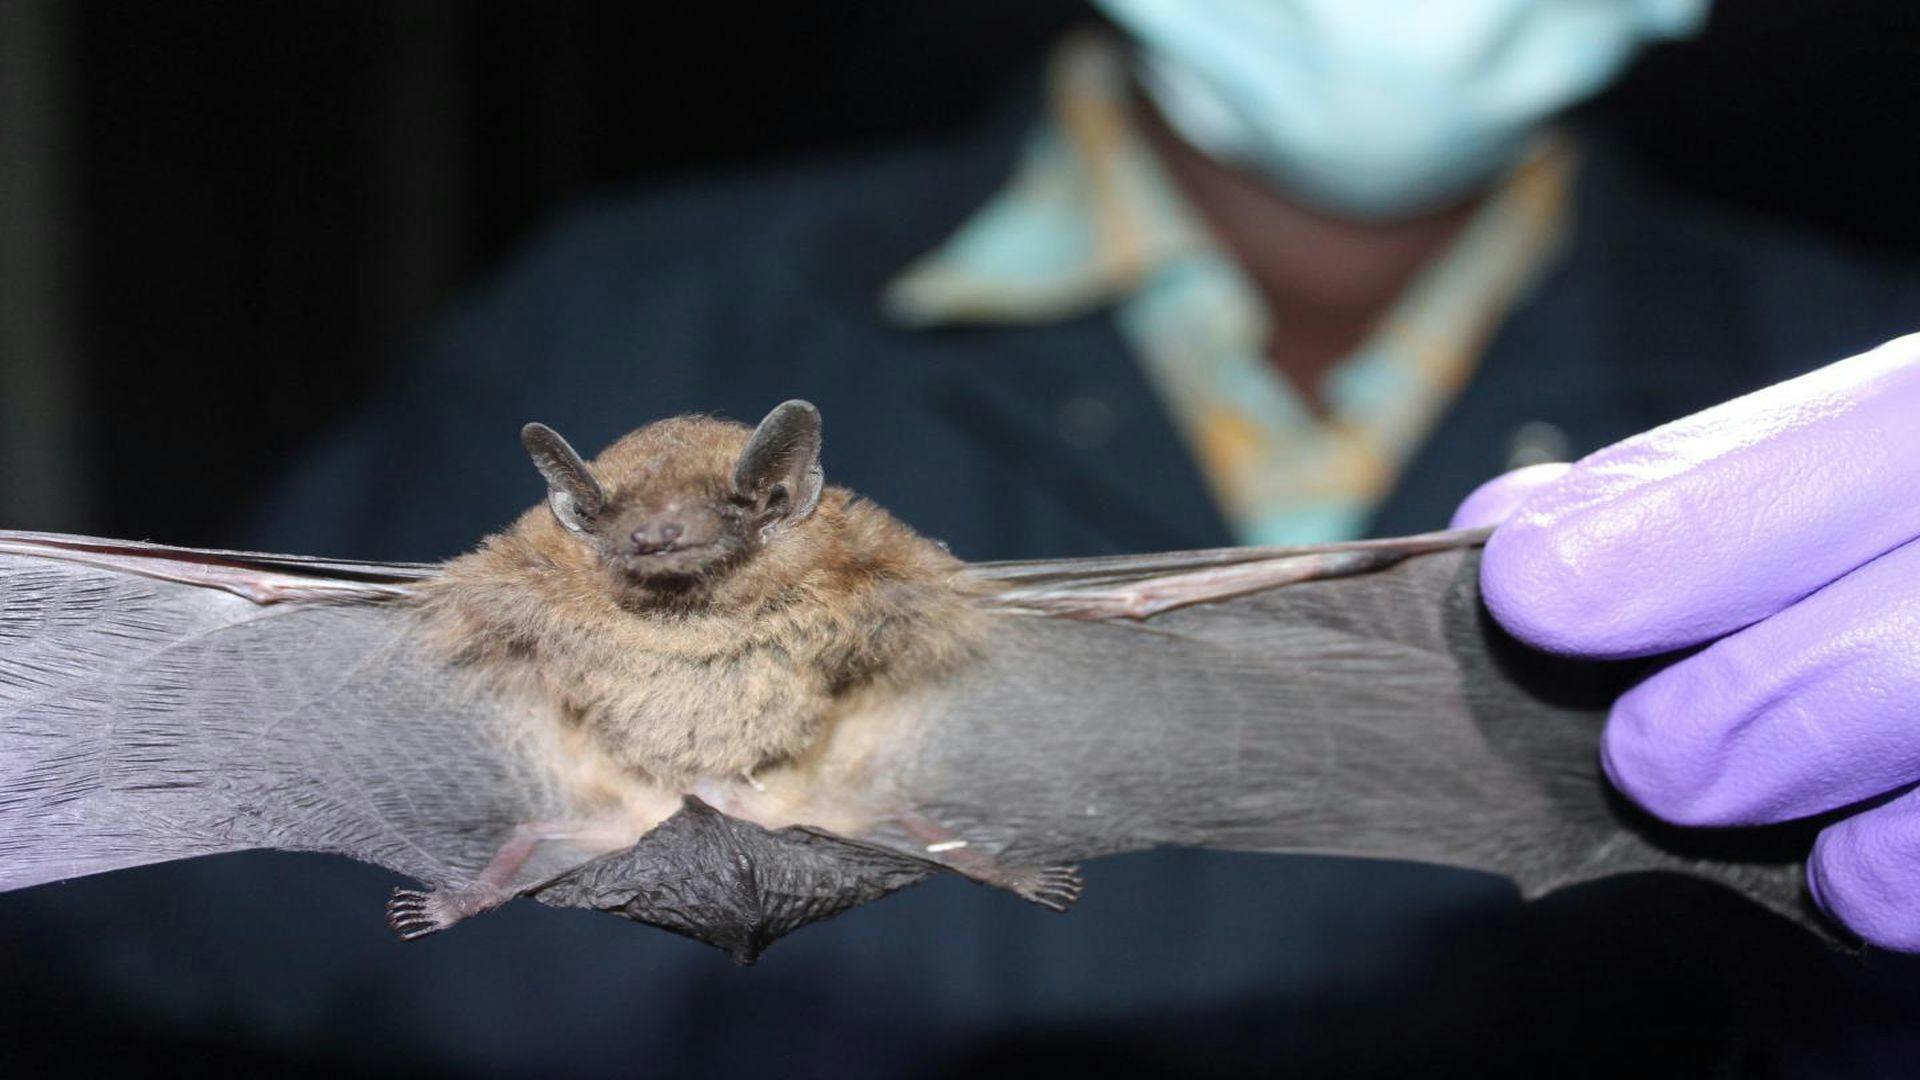 Bats are the Major Reservoir of Coronaviruses Worldwide